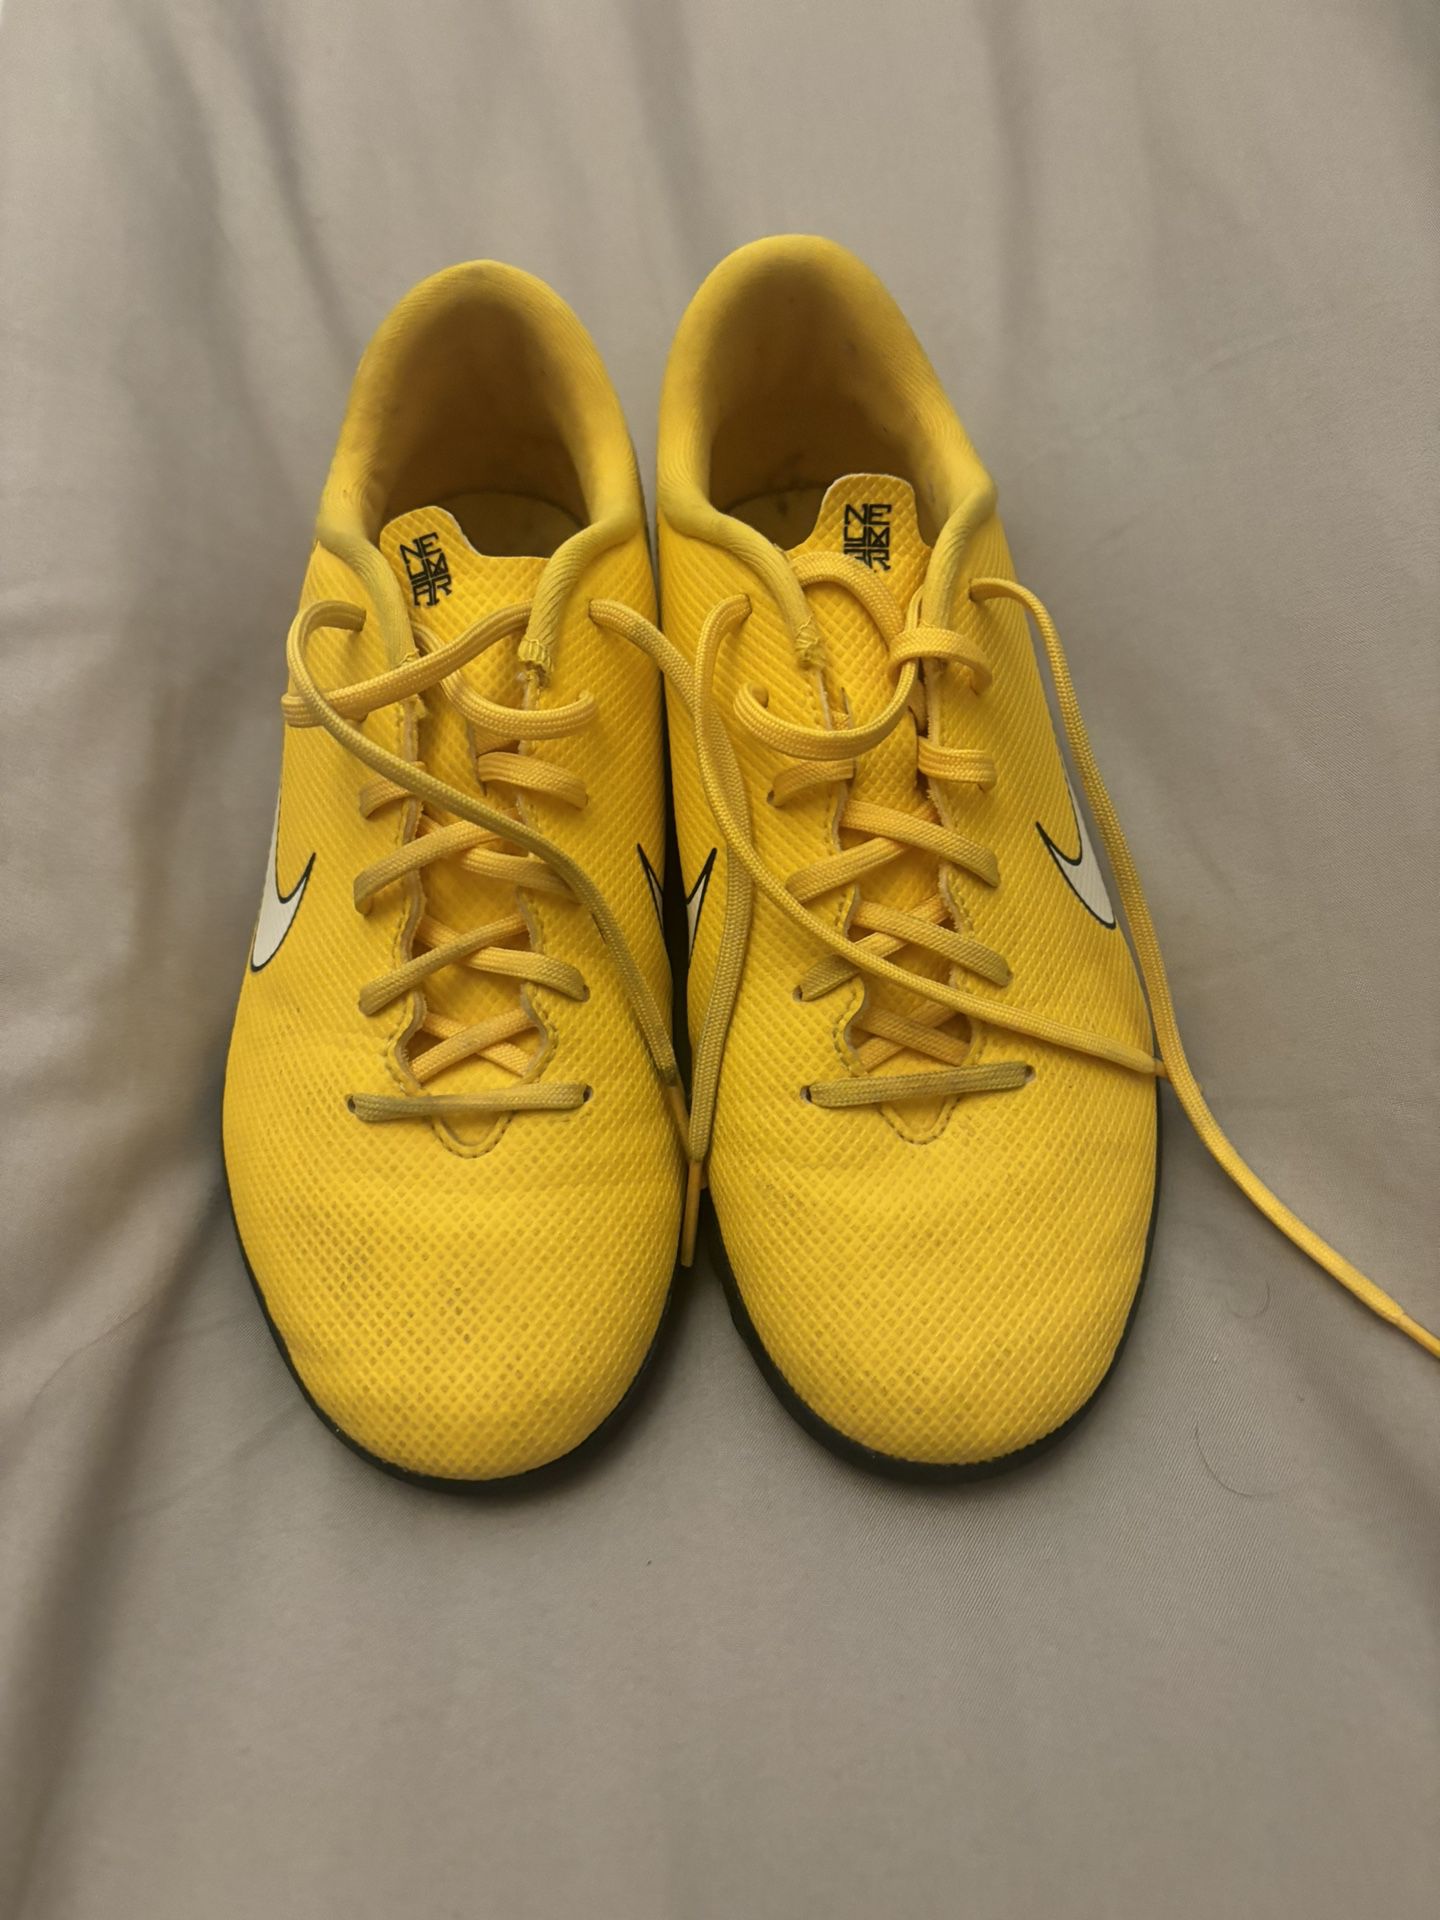 Boys Nike Yellow Cleats Size 4